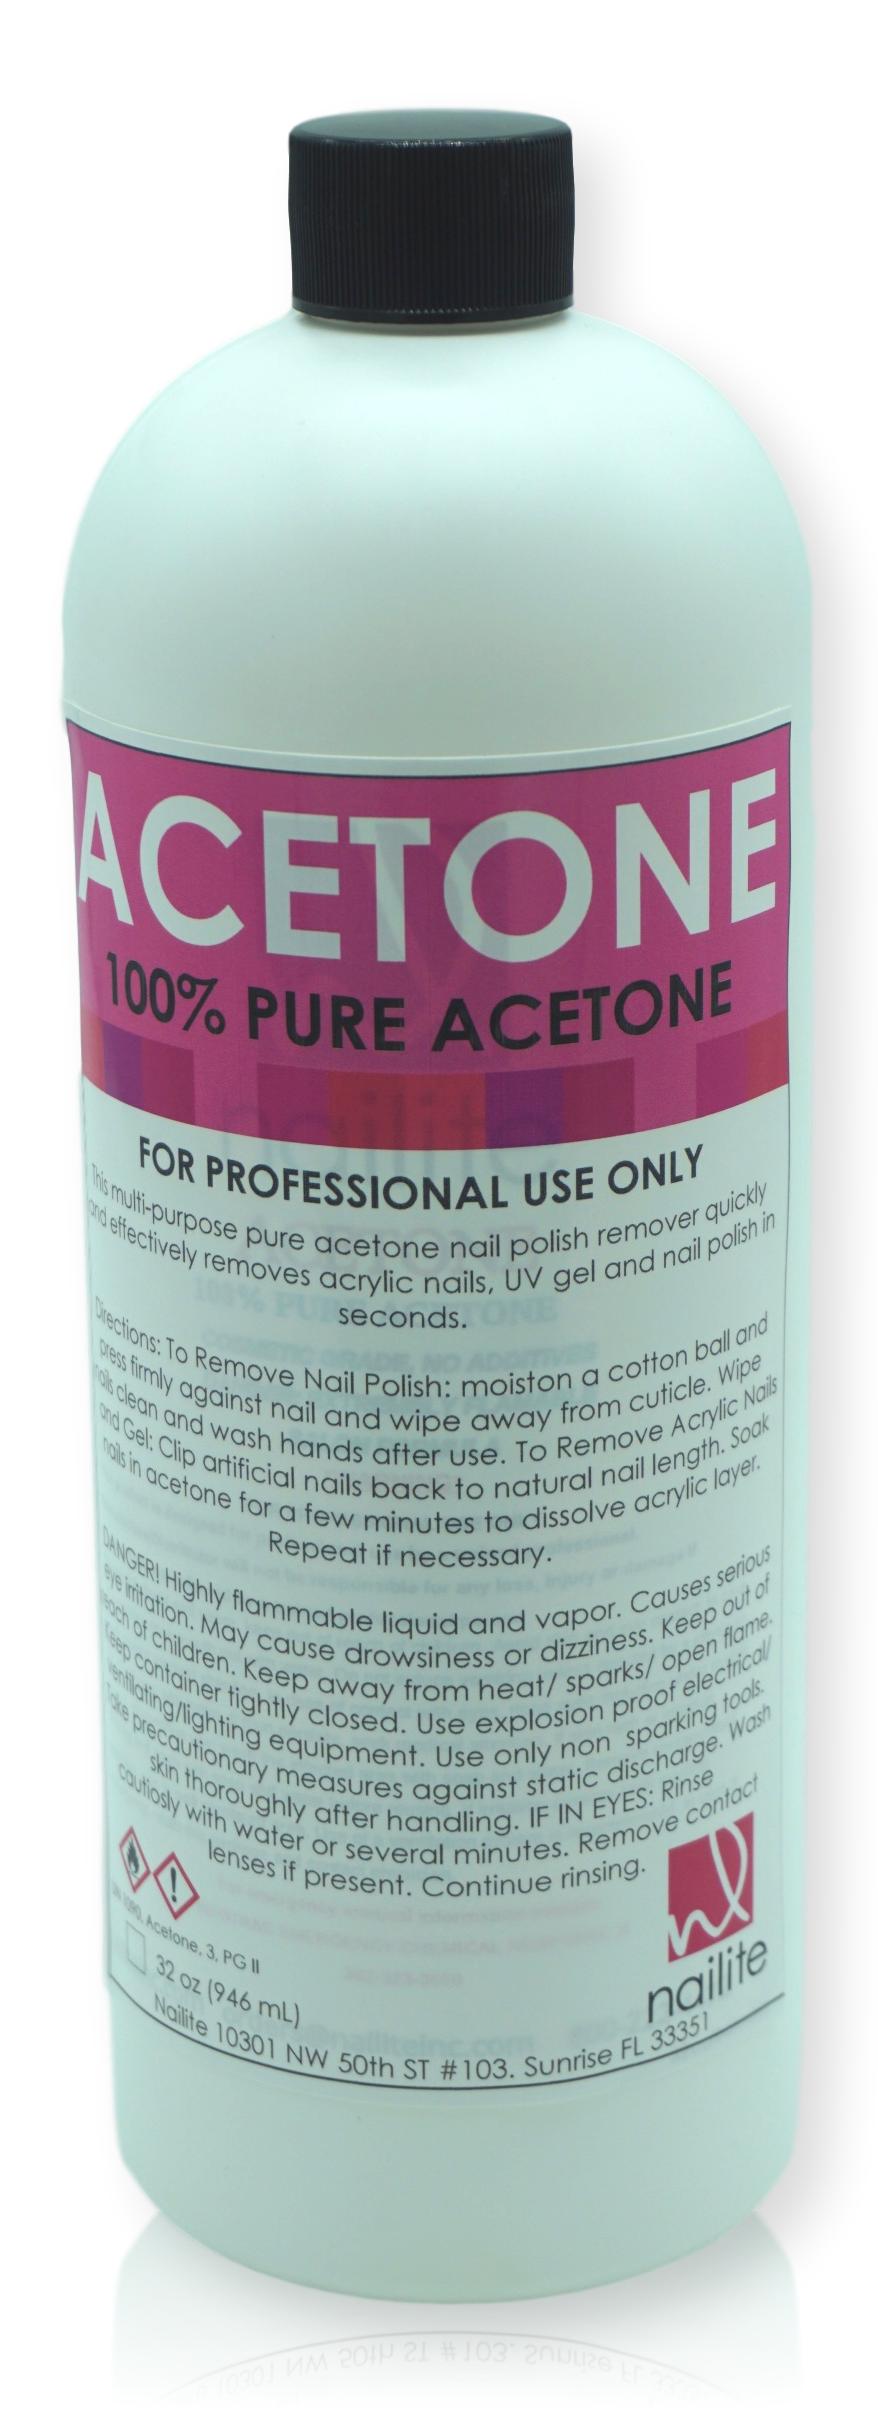 SuperNail Pure Acetone 32 oz.